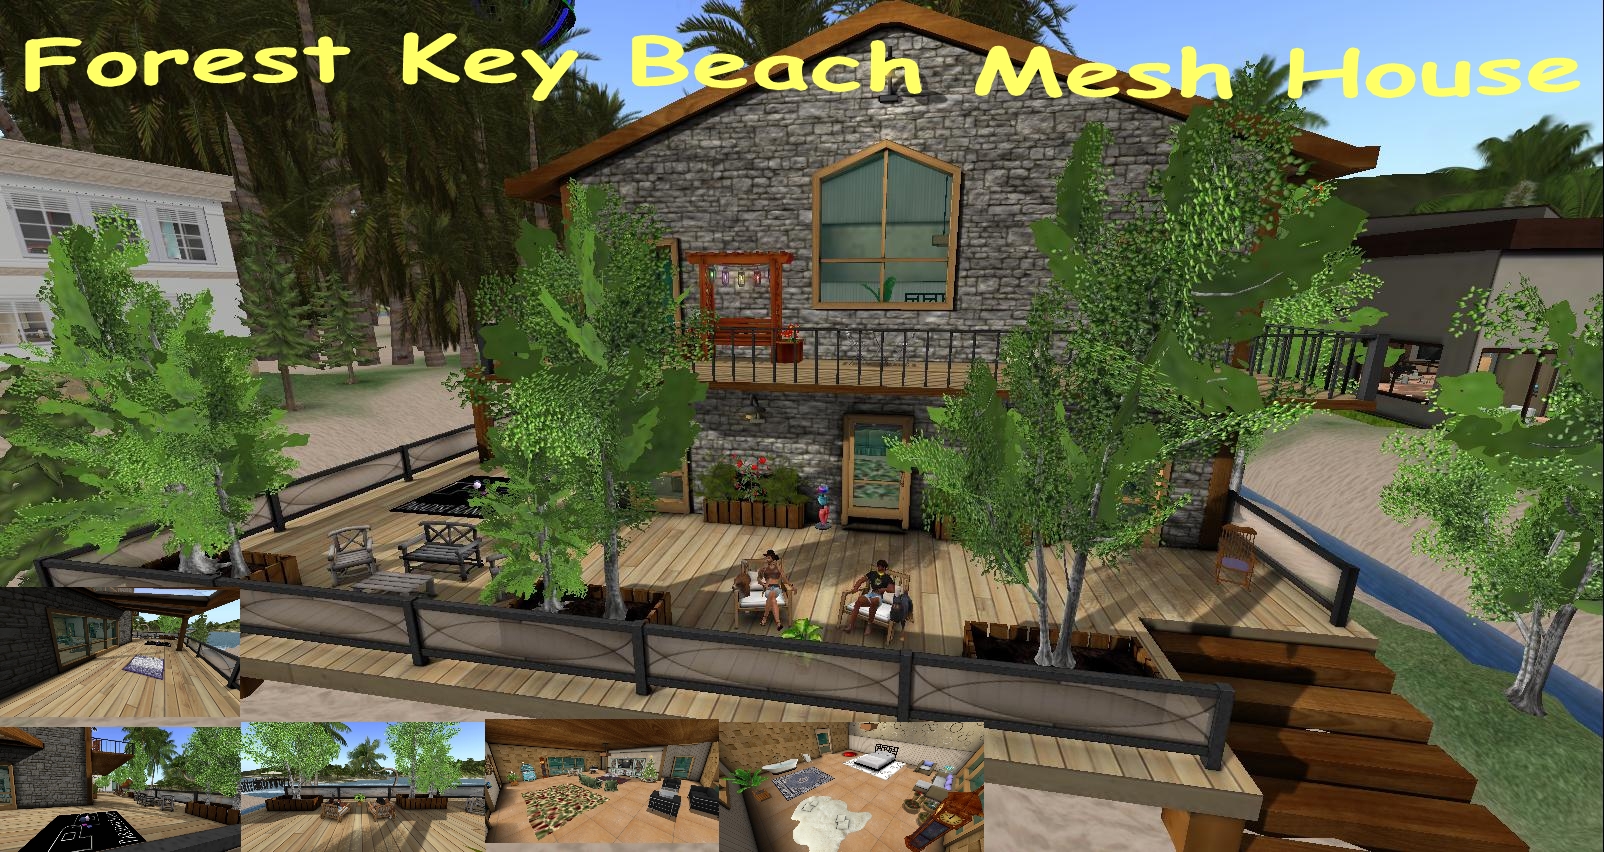 Forest Key Beach Mesh House